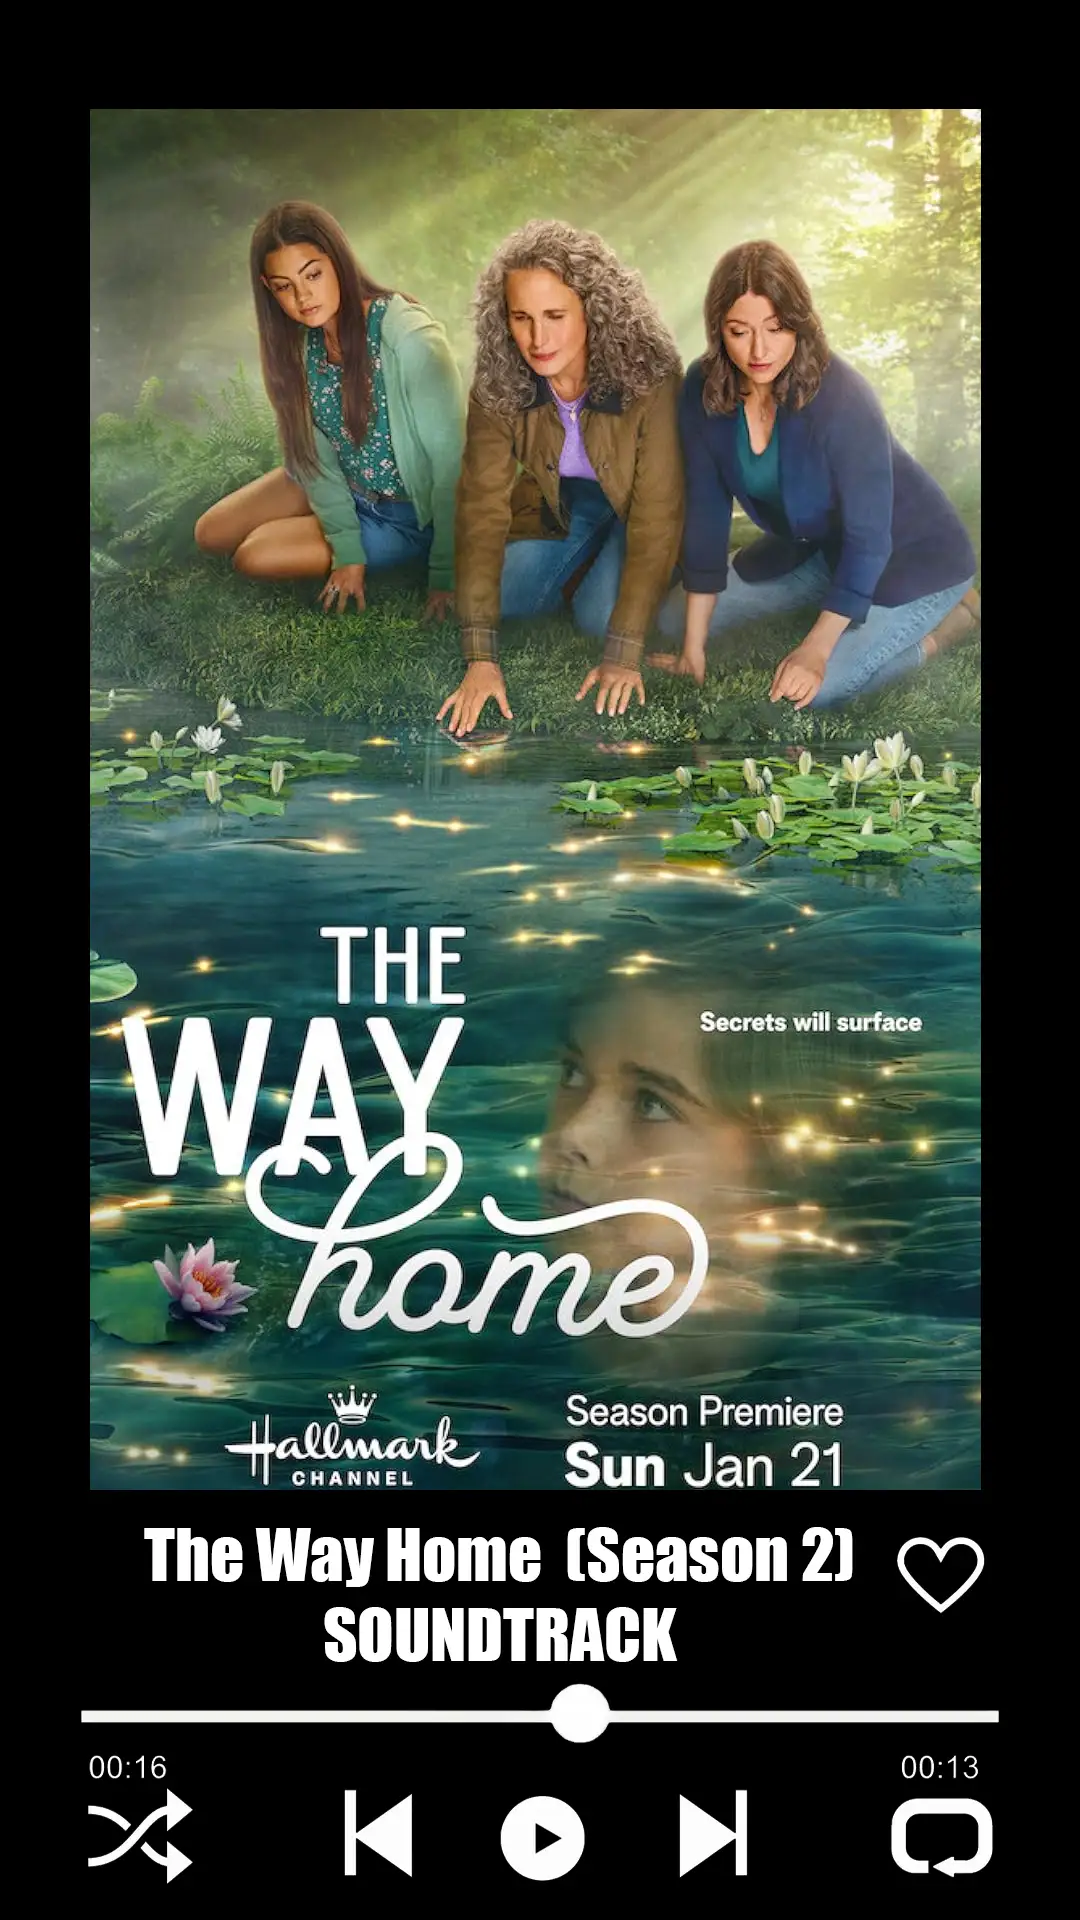 The Way Home Season 2 Soundtrack